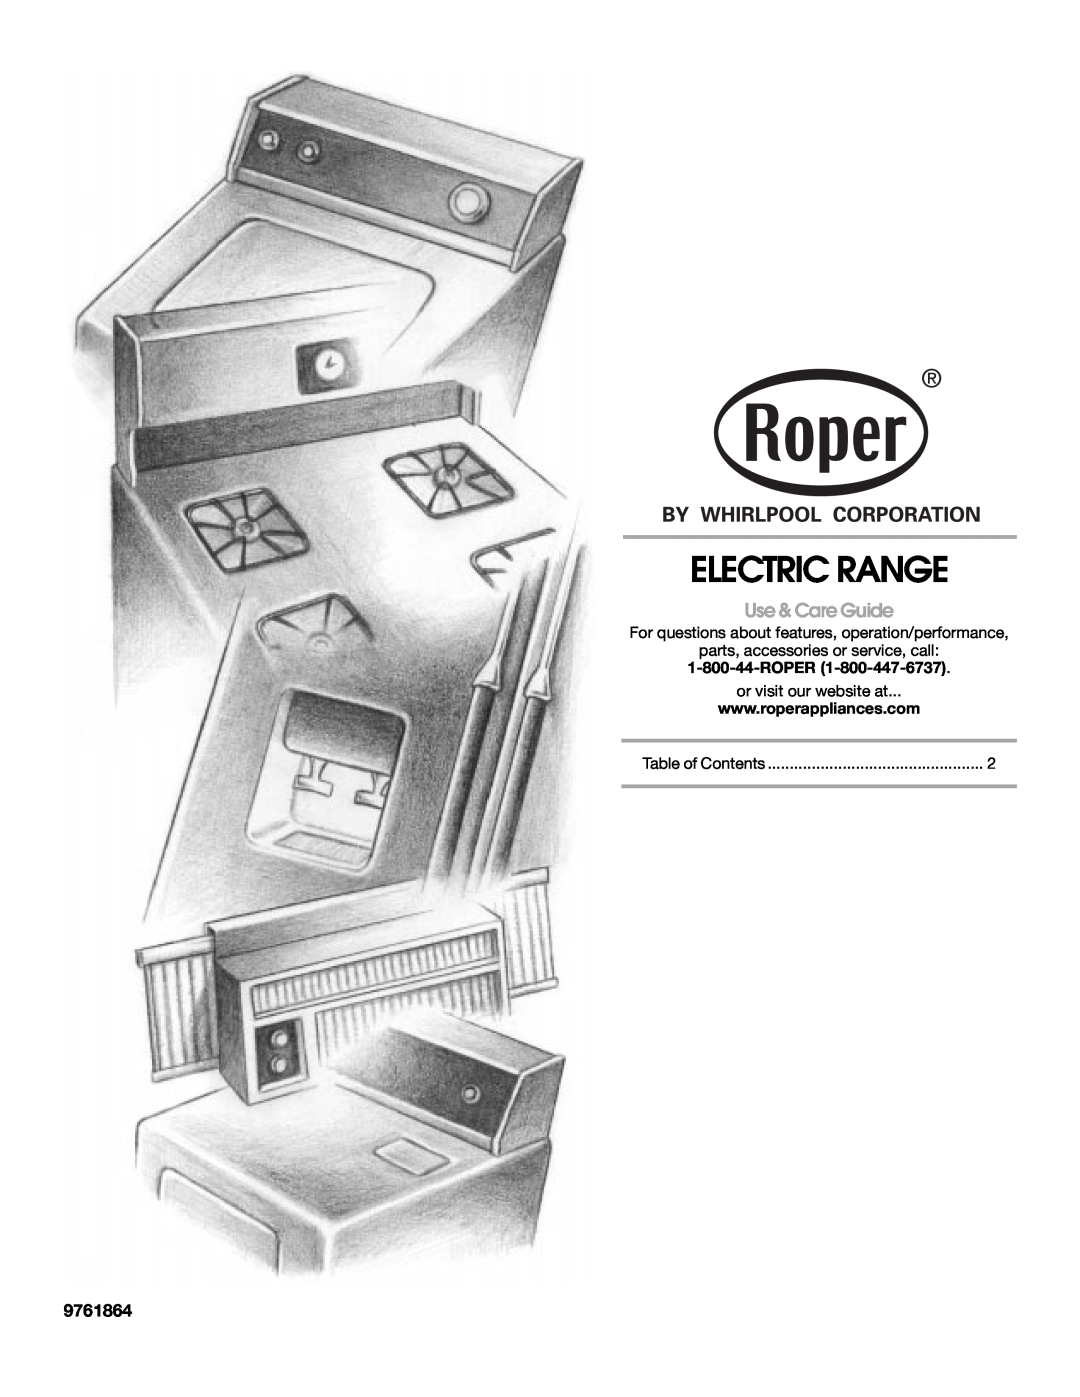 Whirlpool FEP310KN1 manual Electric Range, Use & Care Guide, 9761864 